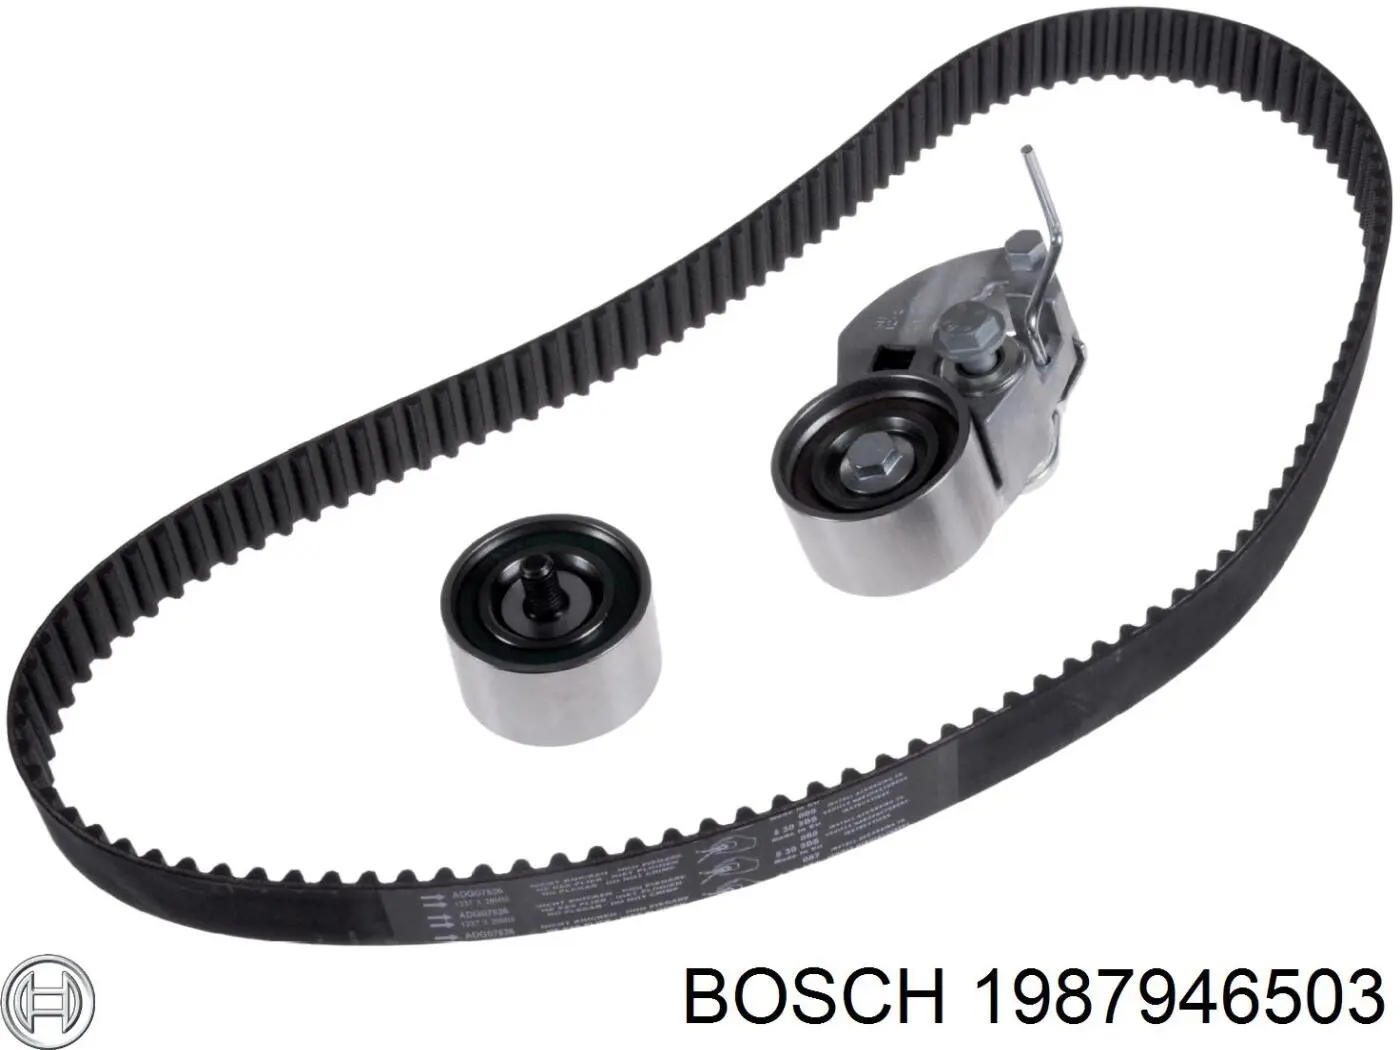 1987946503 Bosch комплект грм